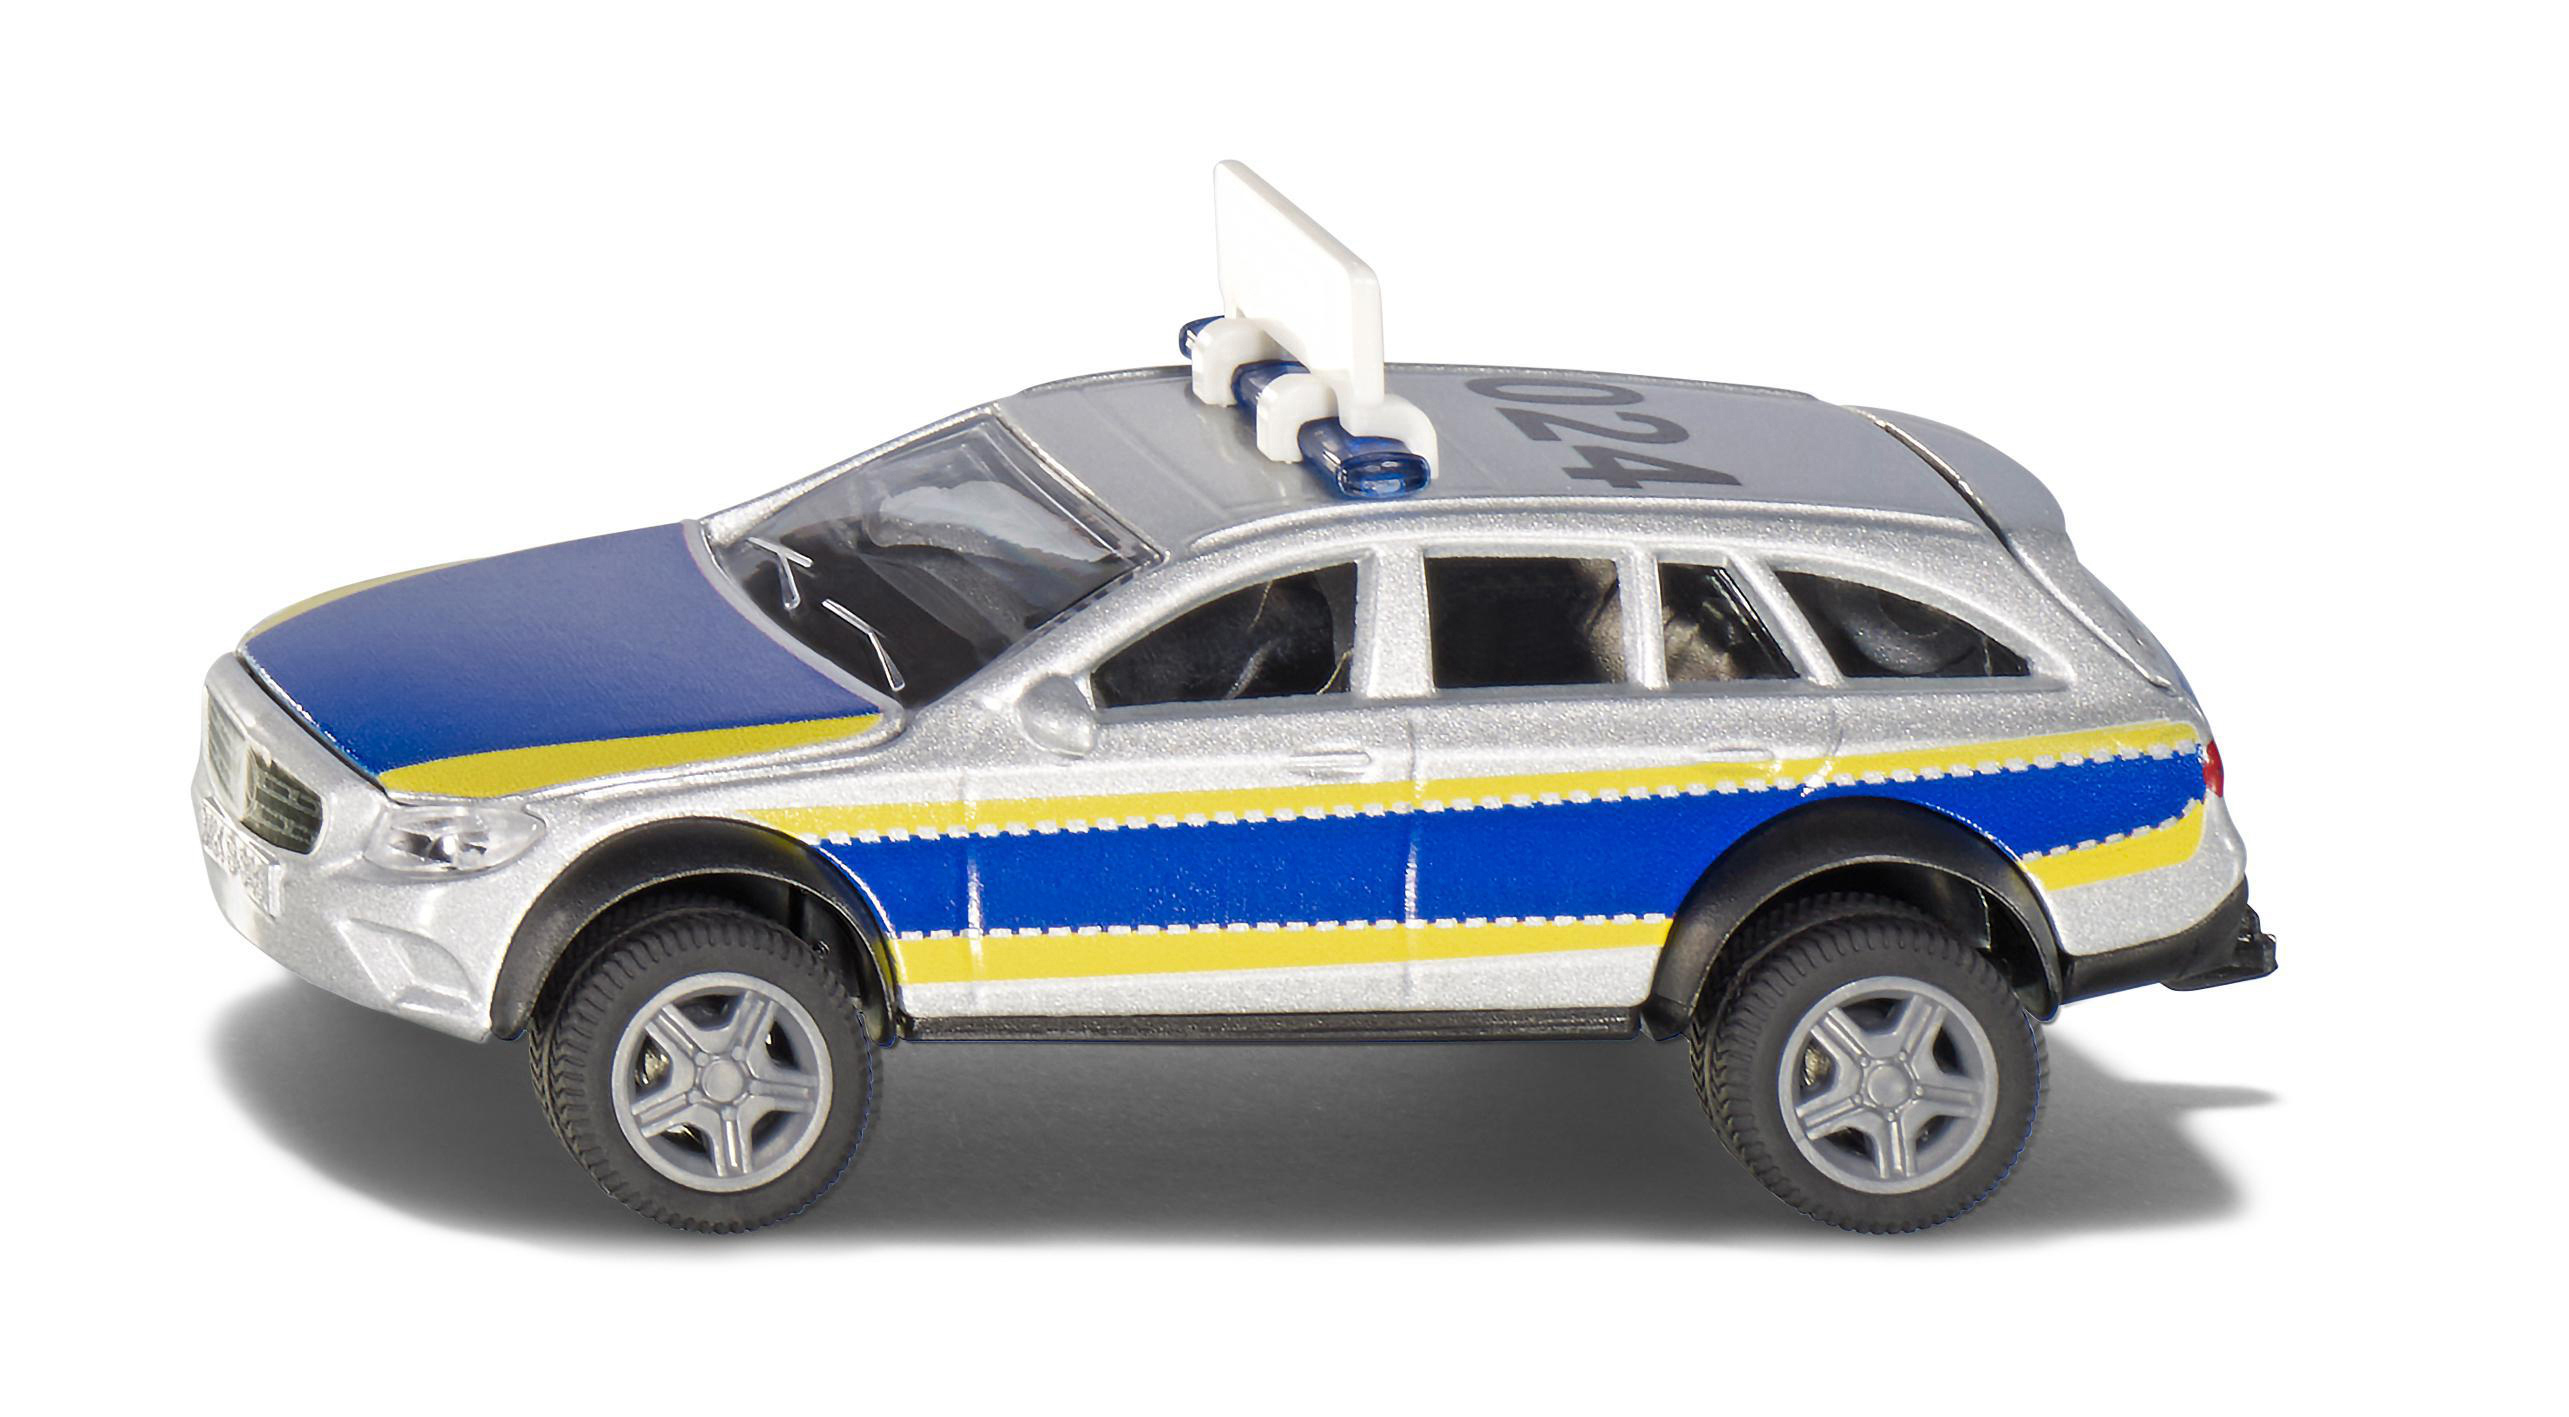 Polizei Mercedes-Benz E-Klasse 4X4 Spielzeugmodellfahrzeug All SIKU Terrain 2302